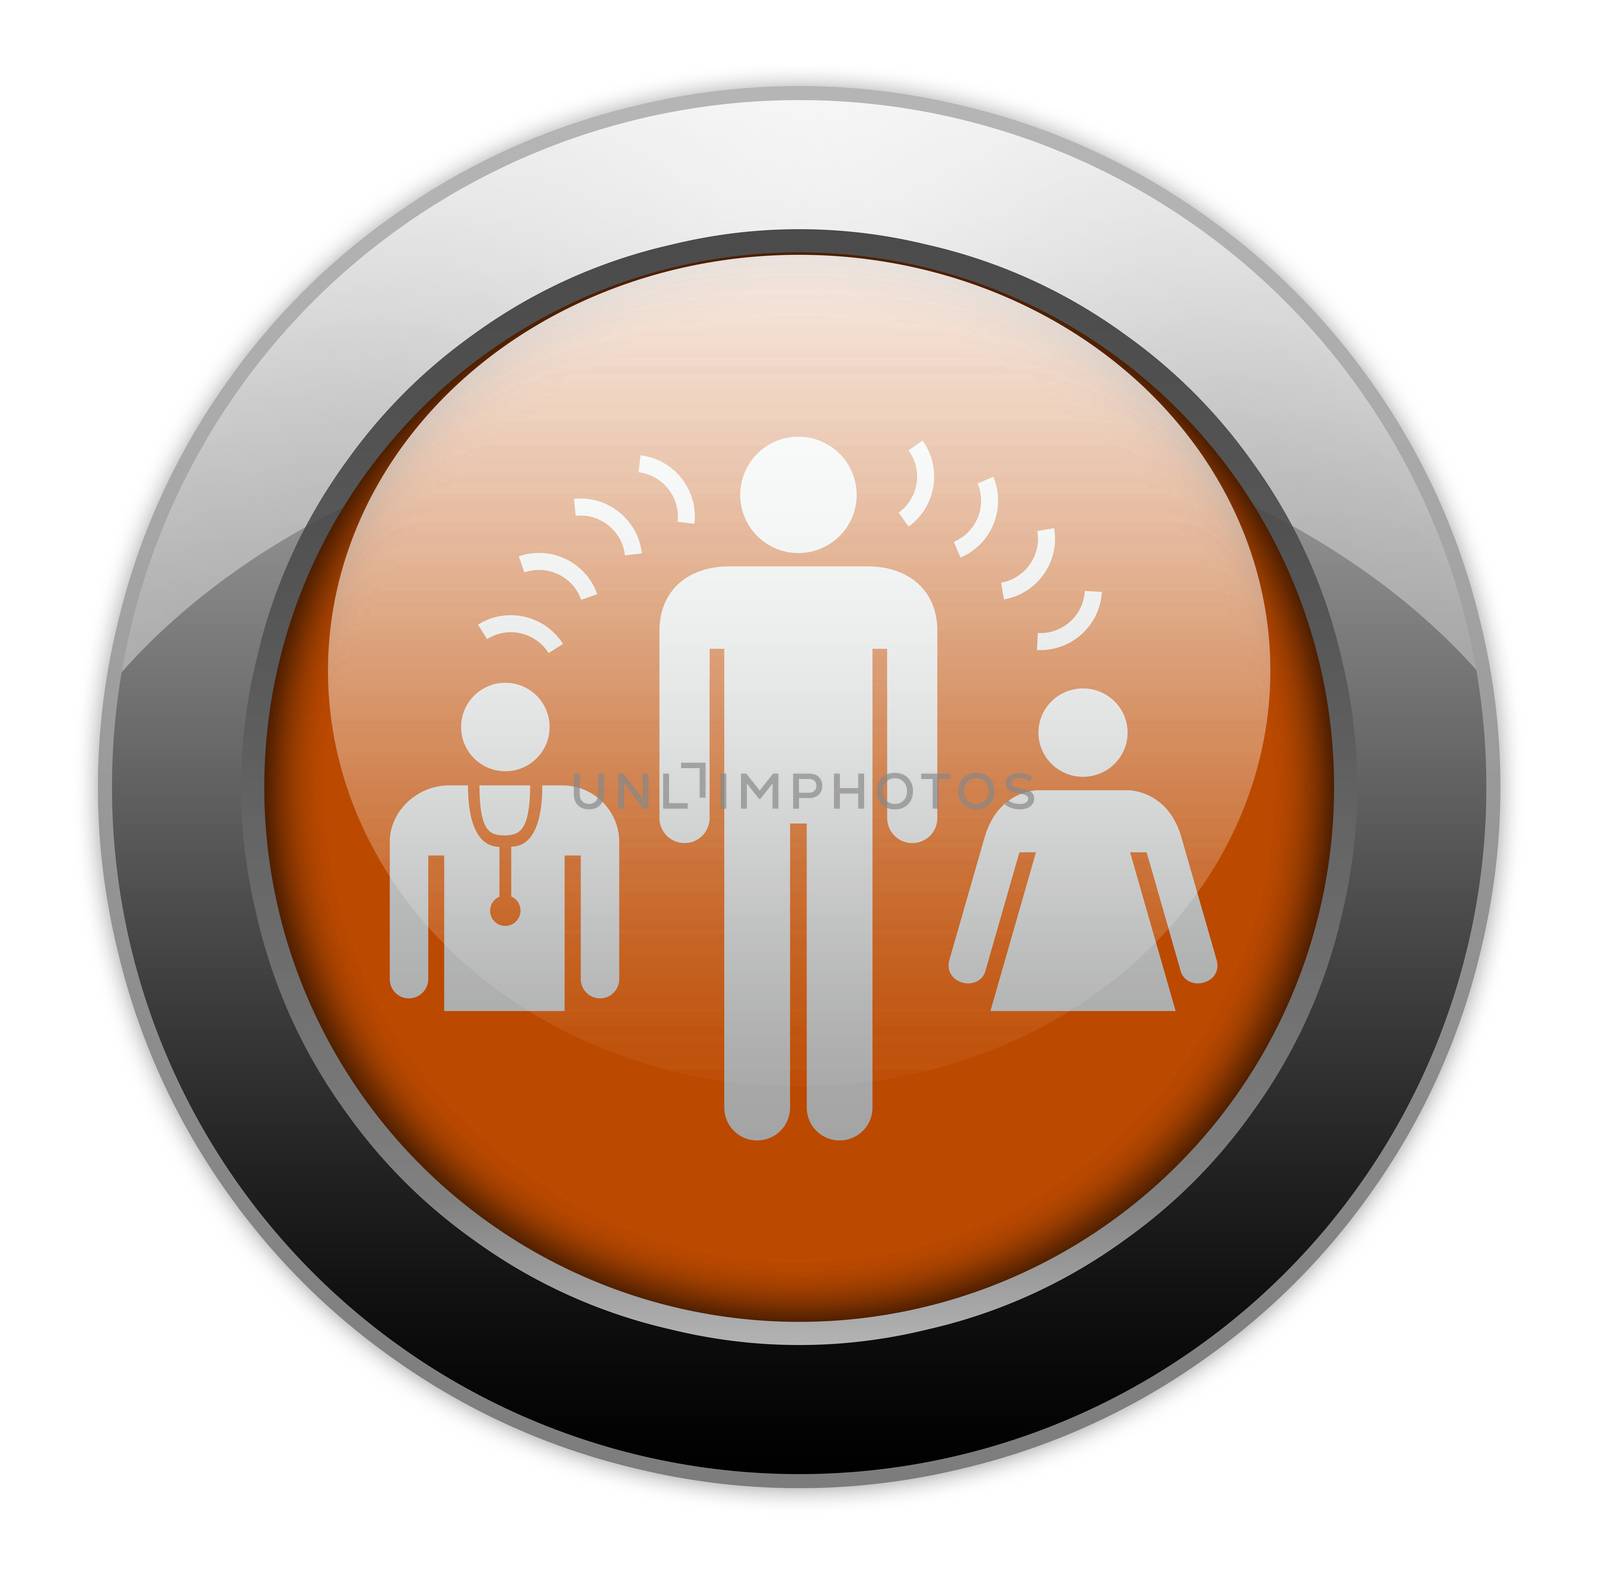 Icon, Button, Pictogram Interpreter Services by mindscanner